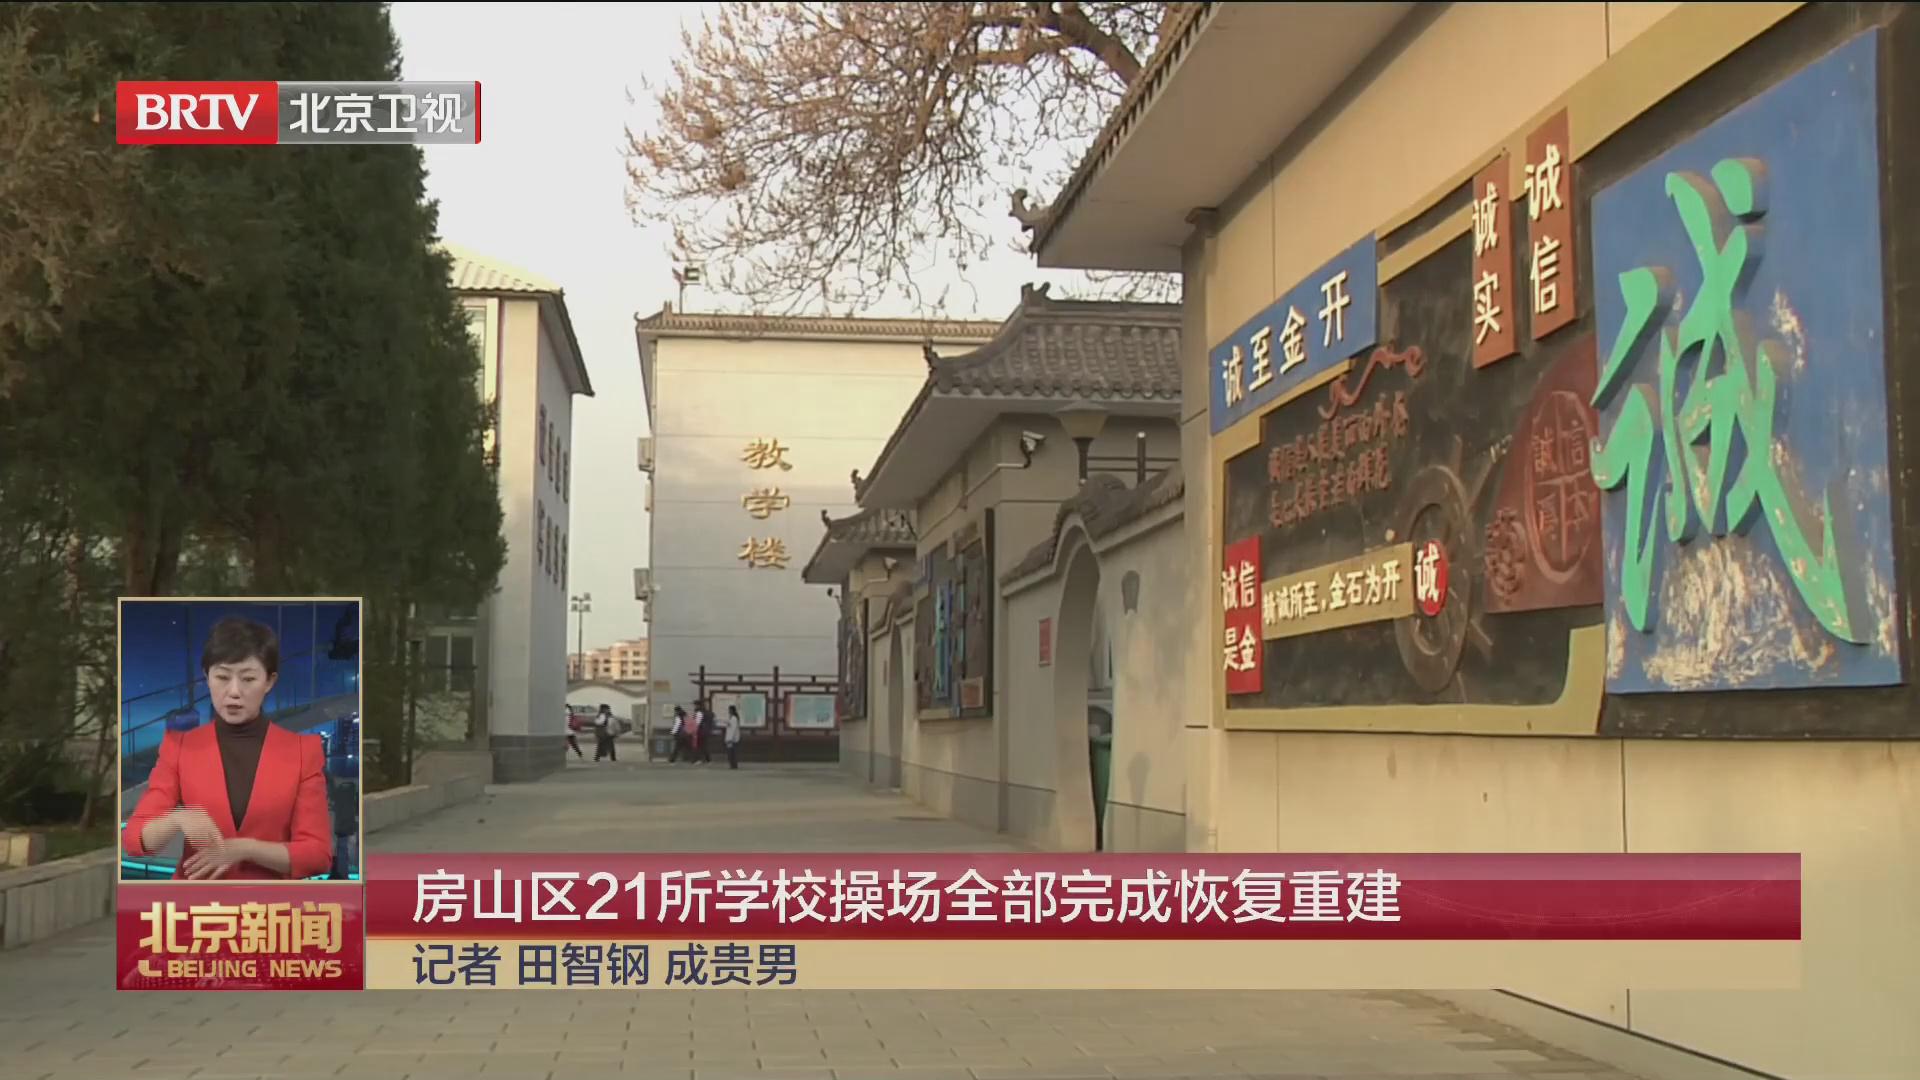 BTV《北京新闻》——房山区21所学校操场全部完成恢复重建